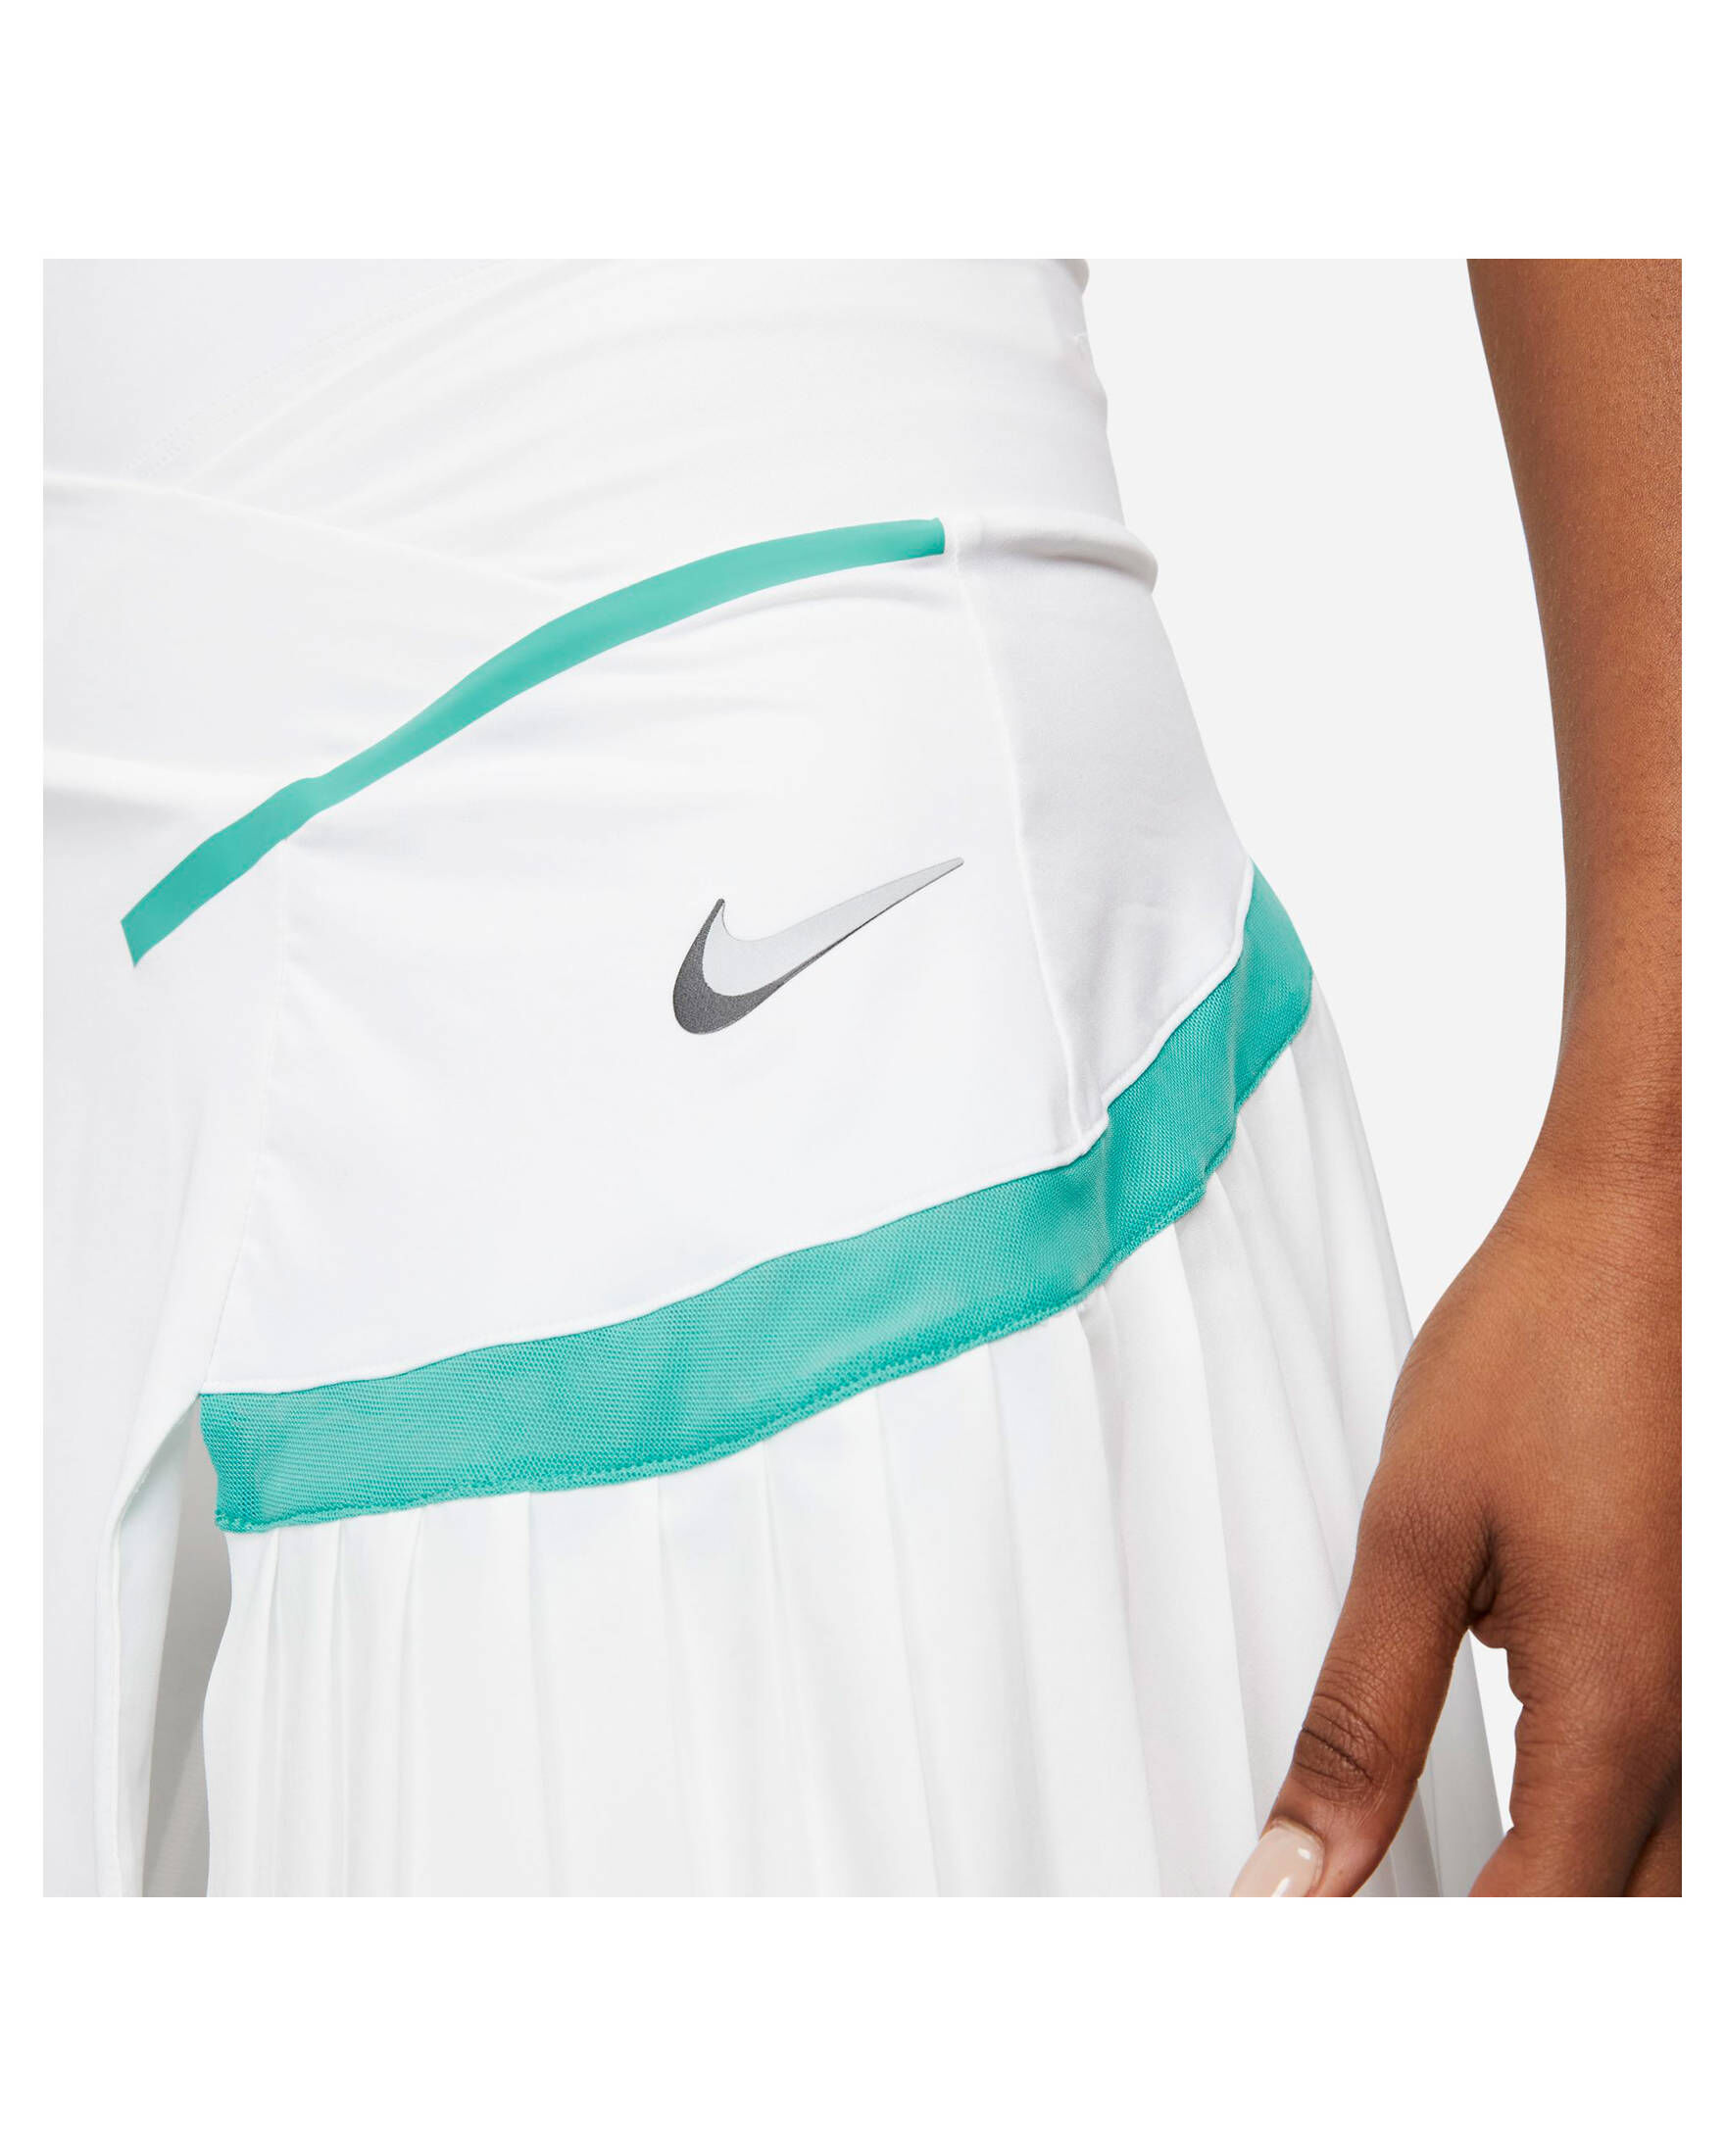 Nike Damen Tennis Rock NIKECOURT W kaufen engelhorn